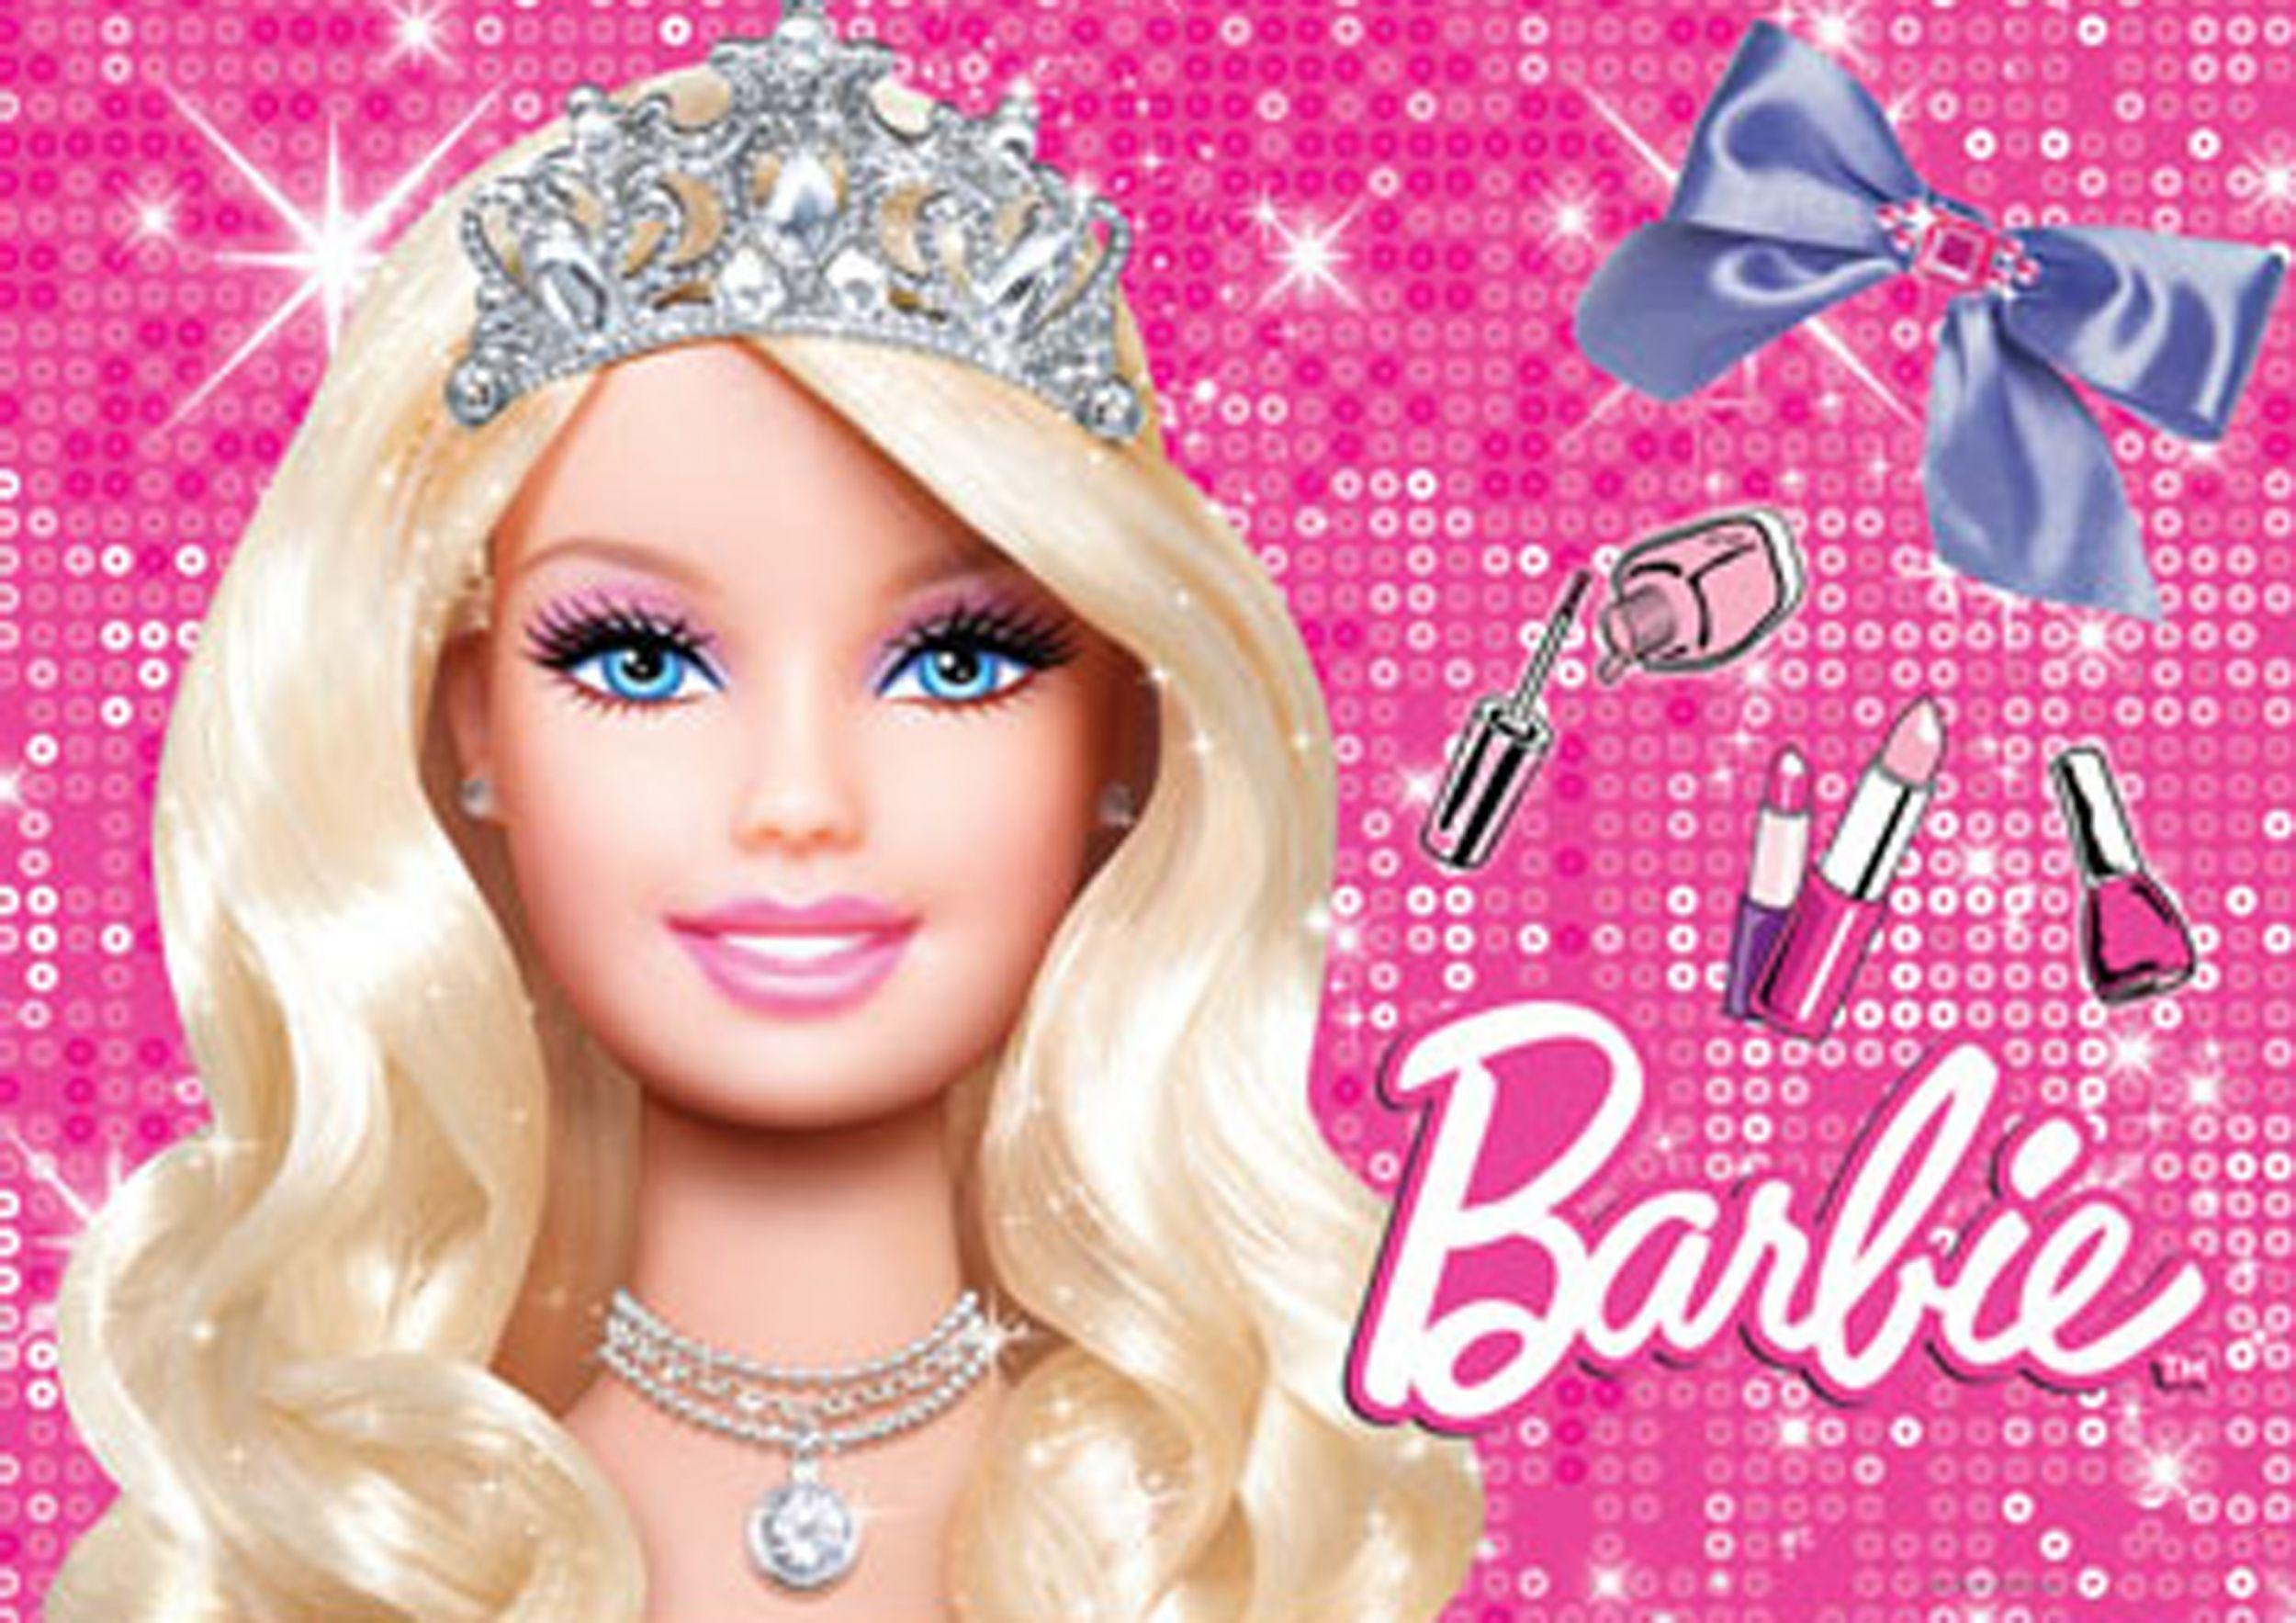 Wallpaper: Barbie, for mobile and desktop